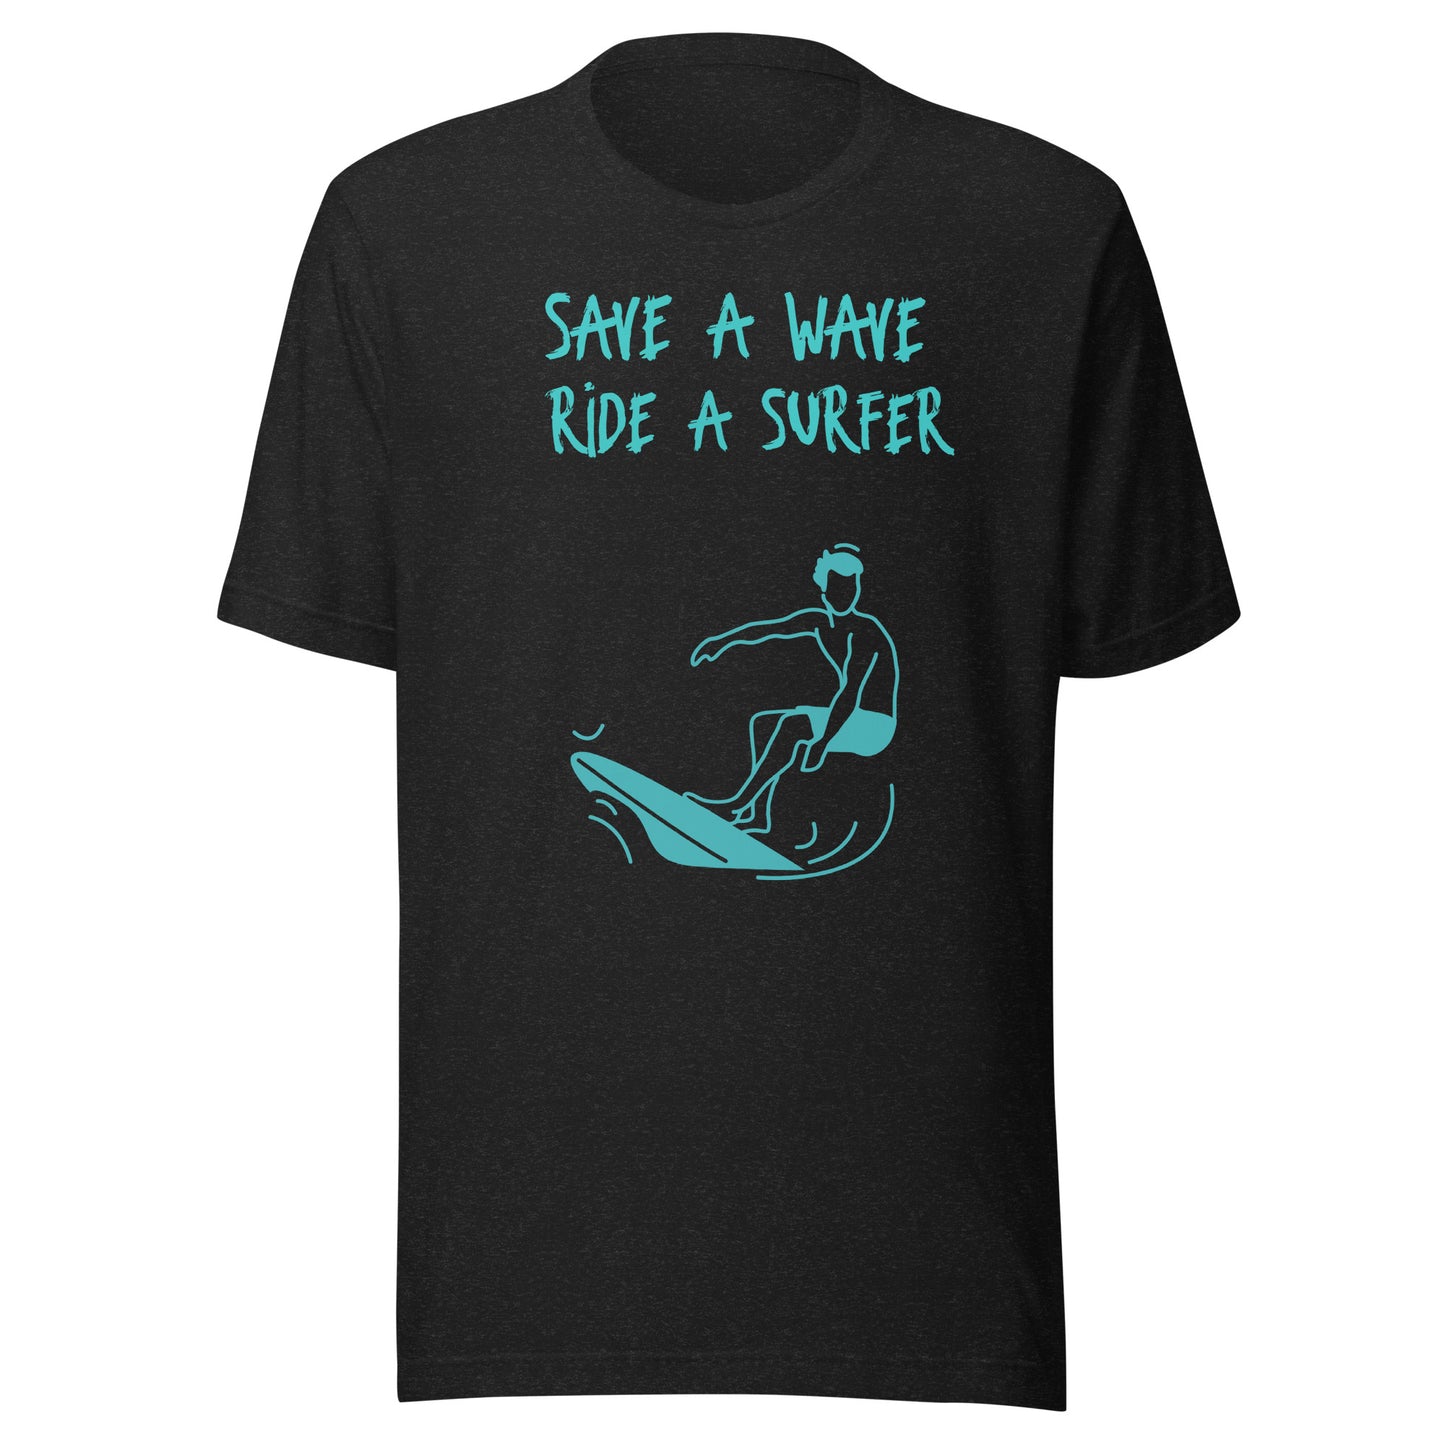 Save a wave ride a surfer - Unisex t-shirt